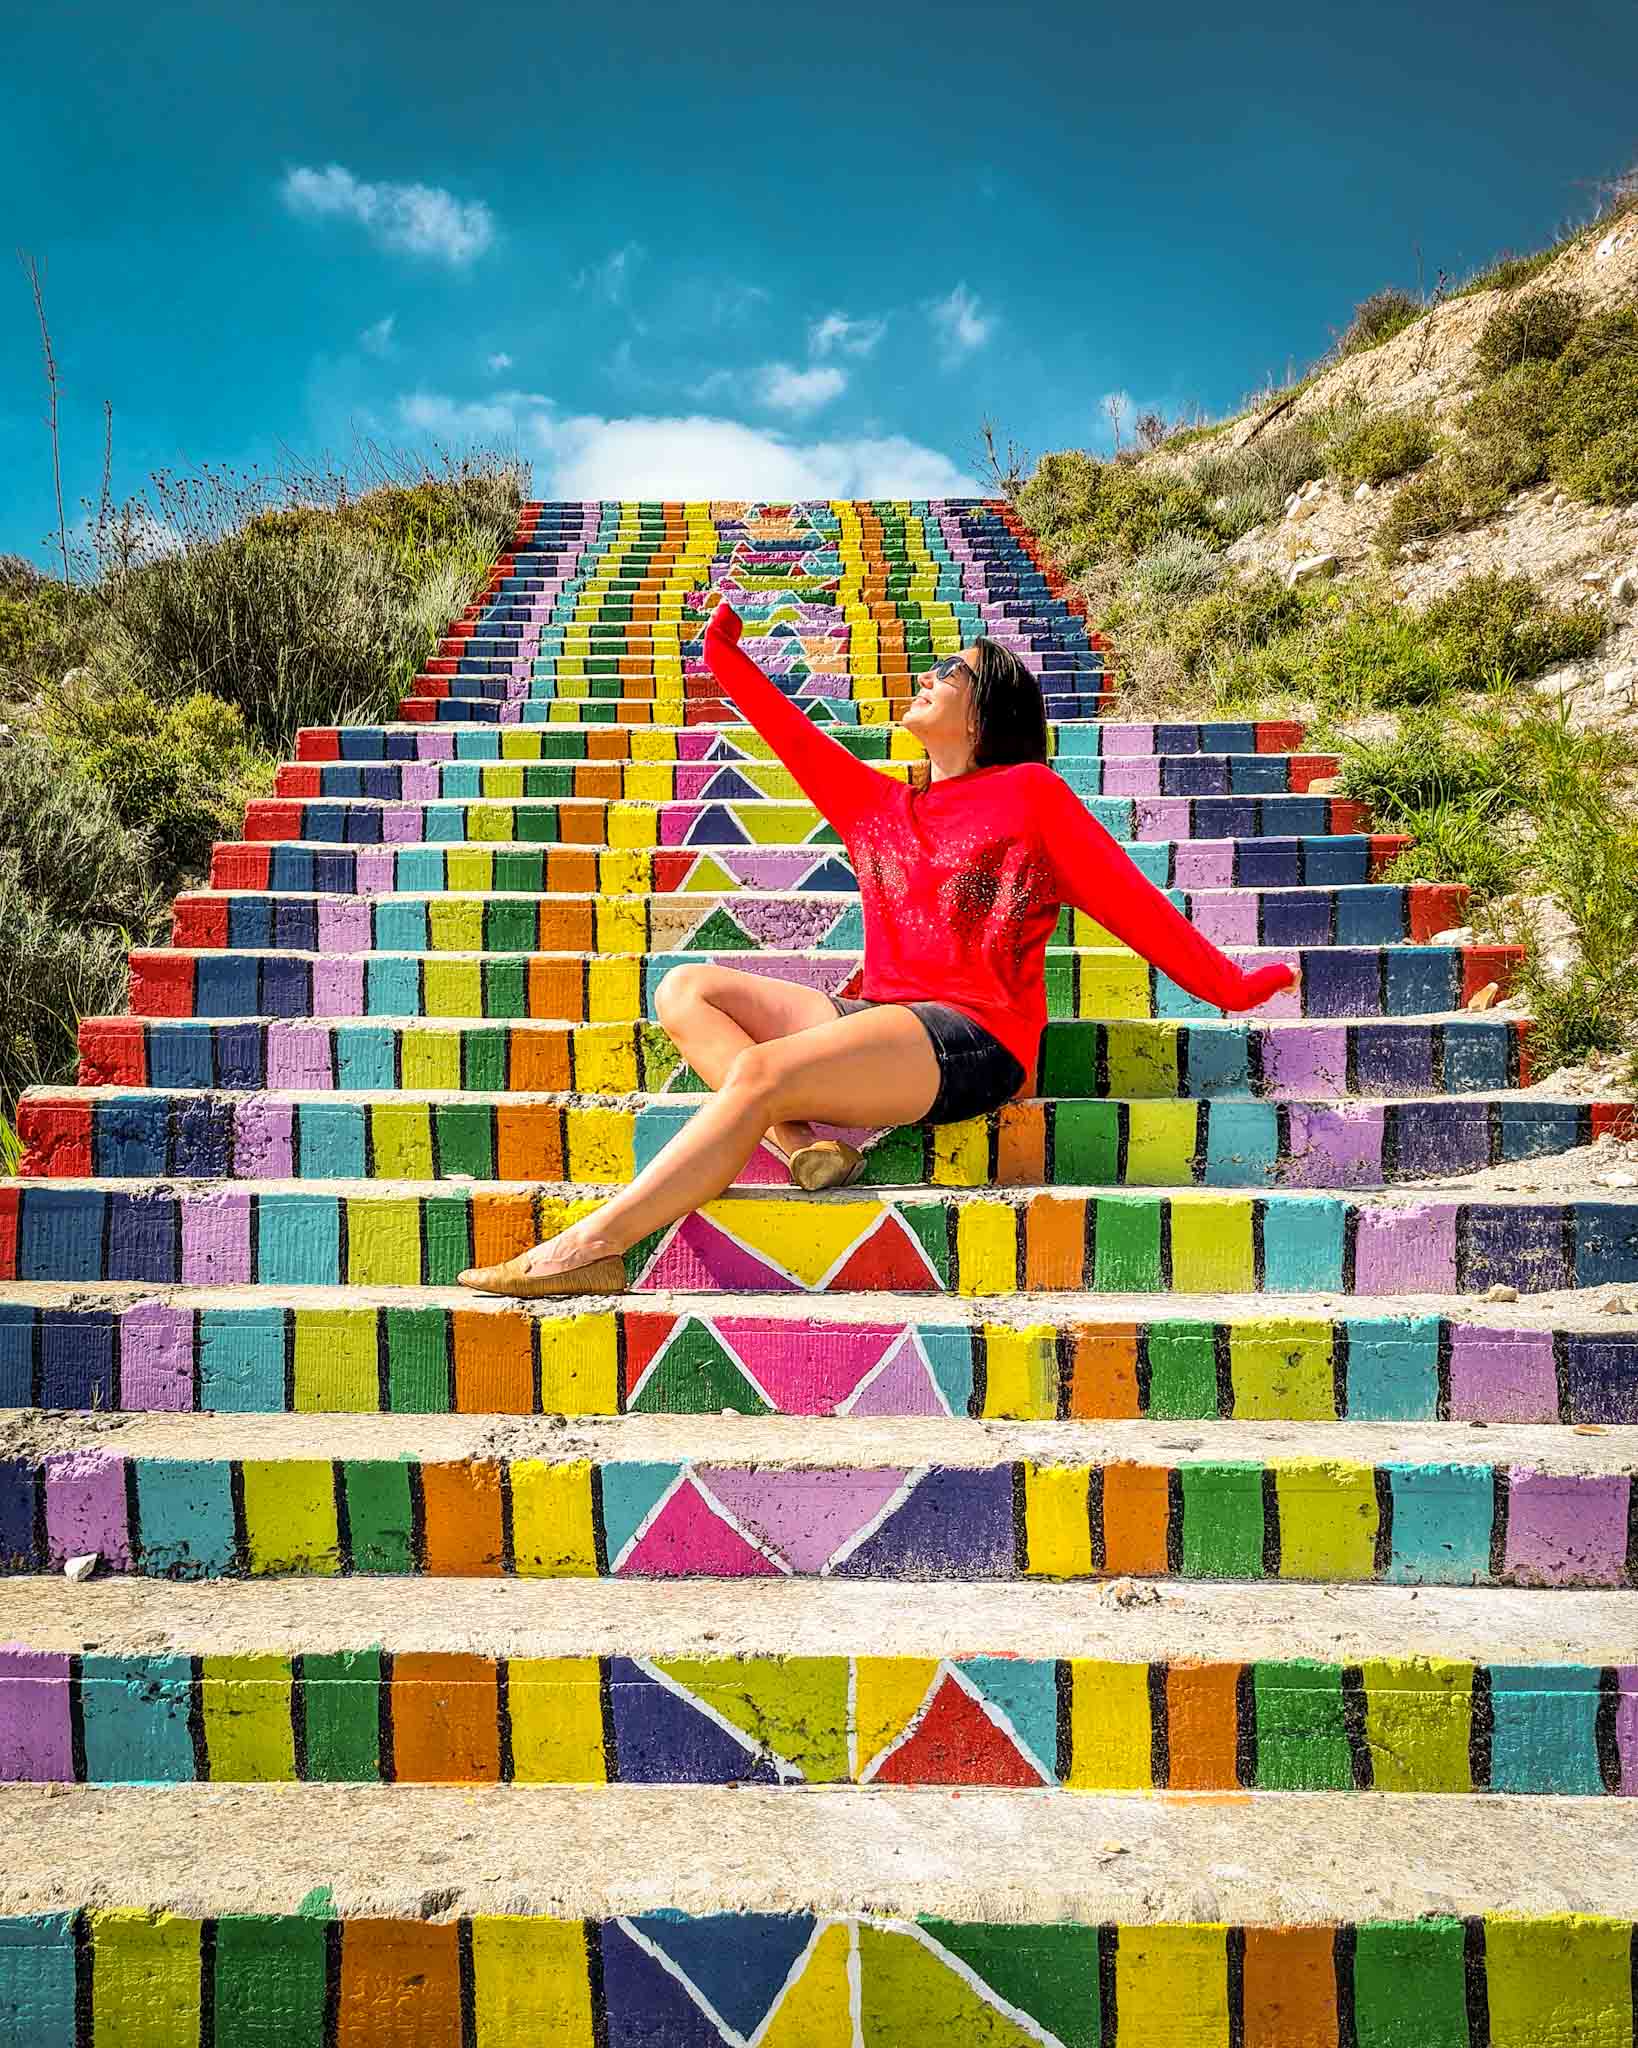 Instagram spots in Cyprus: Love stairs in Lympia Cyprus